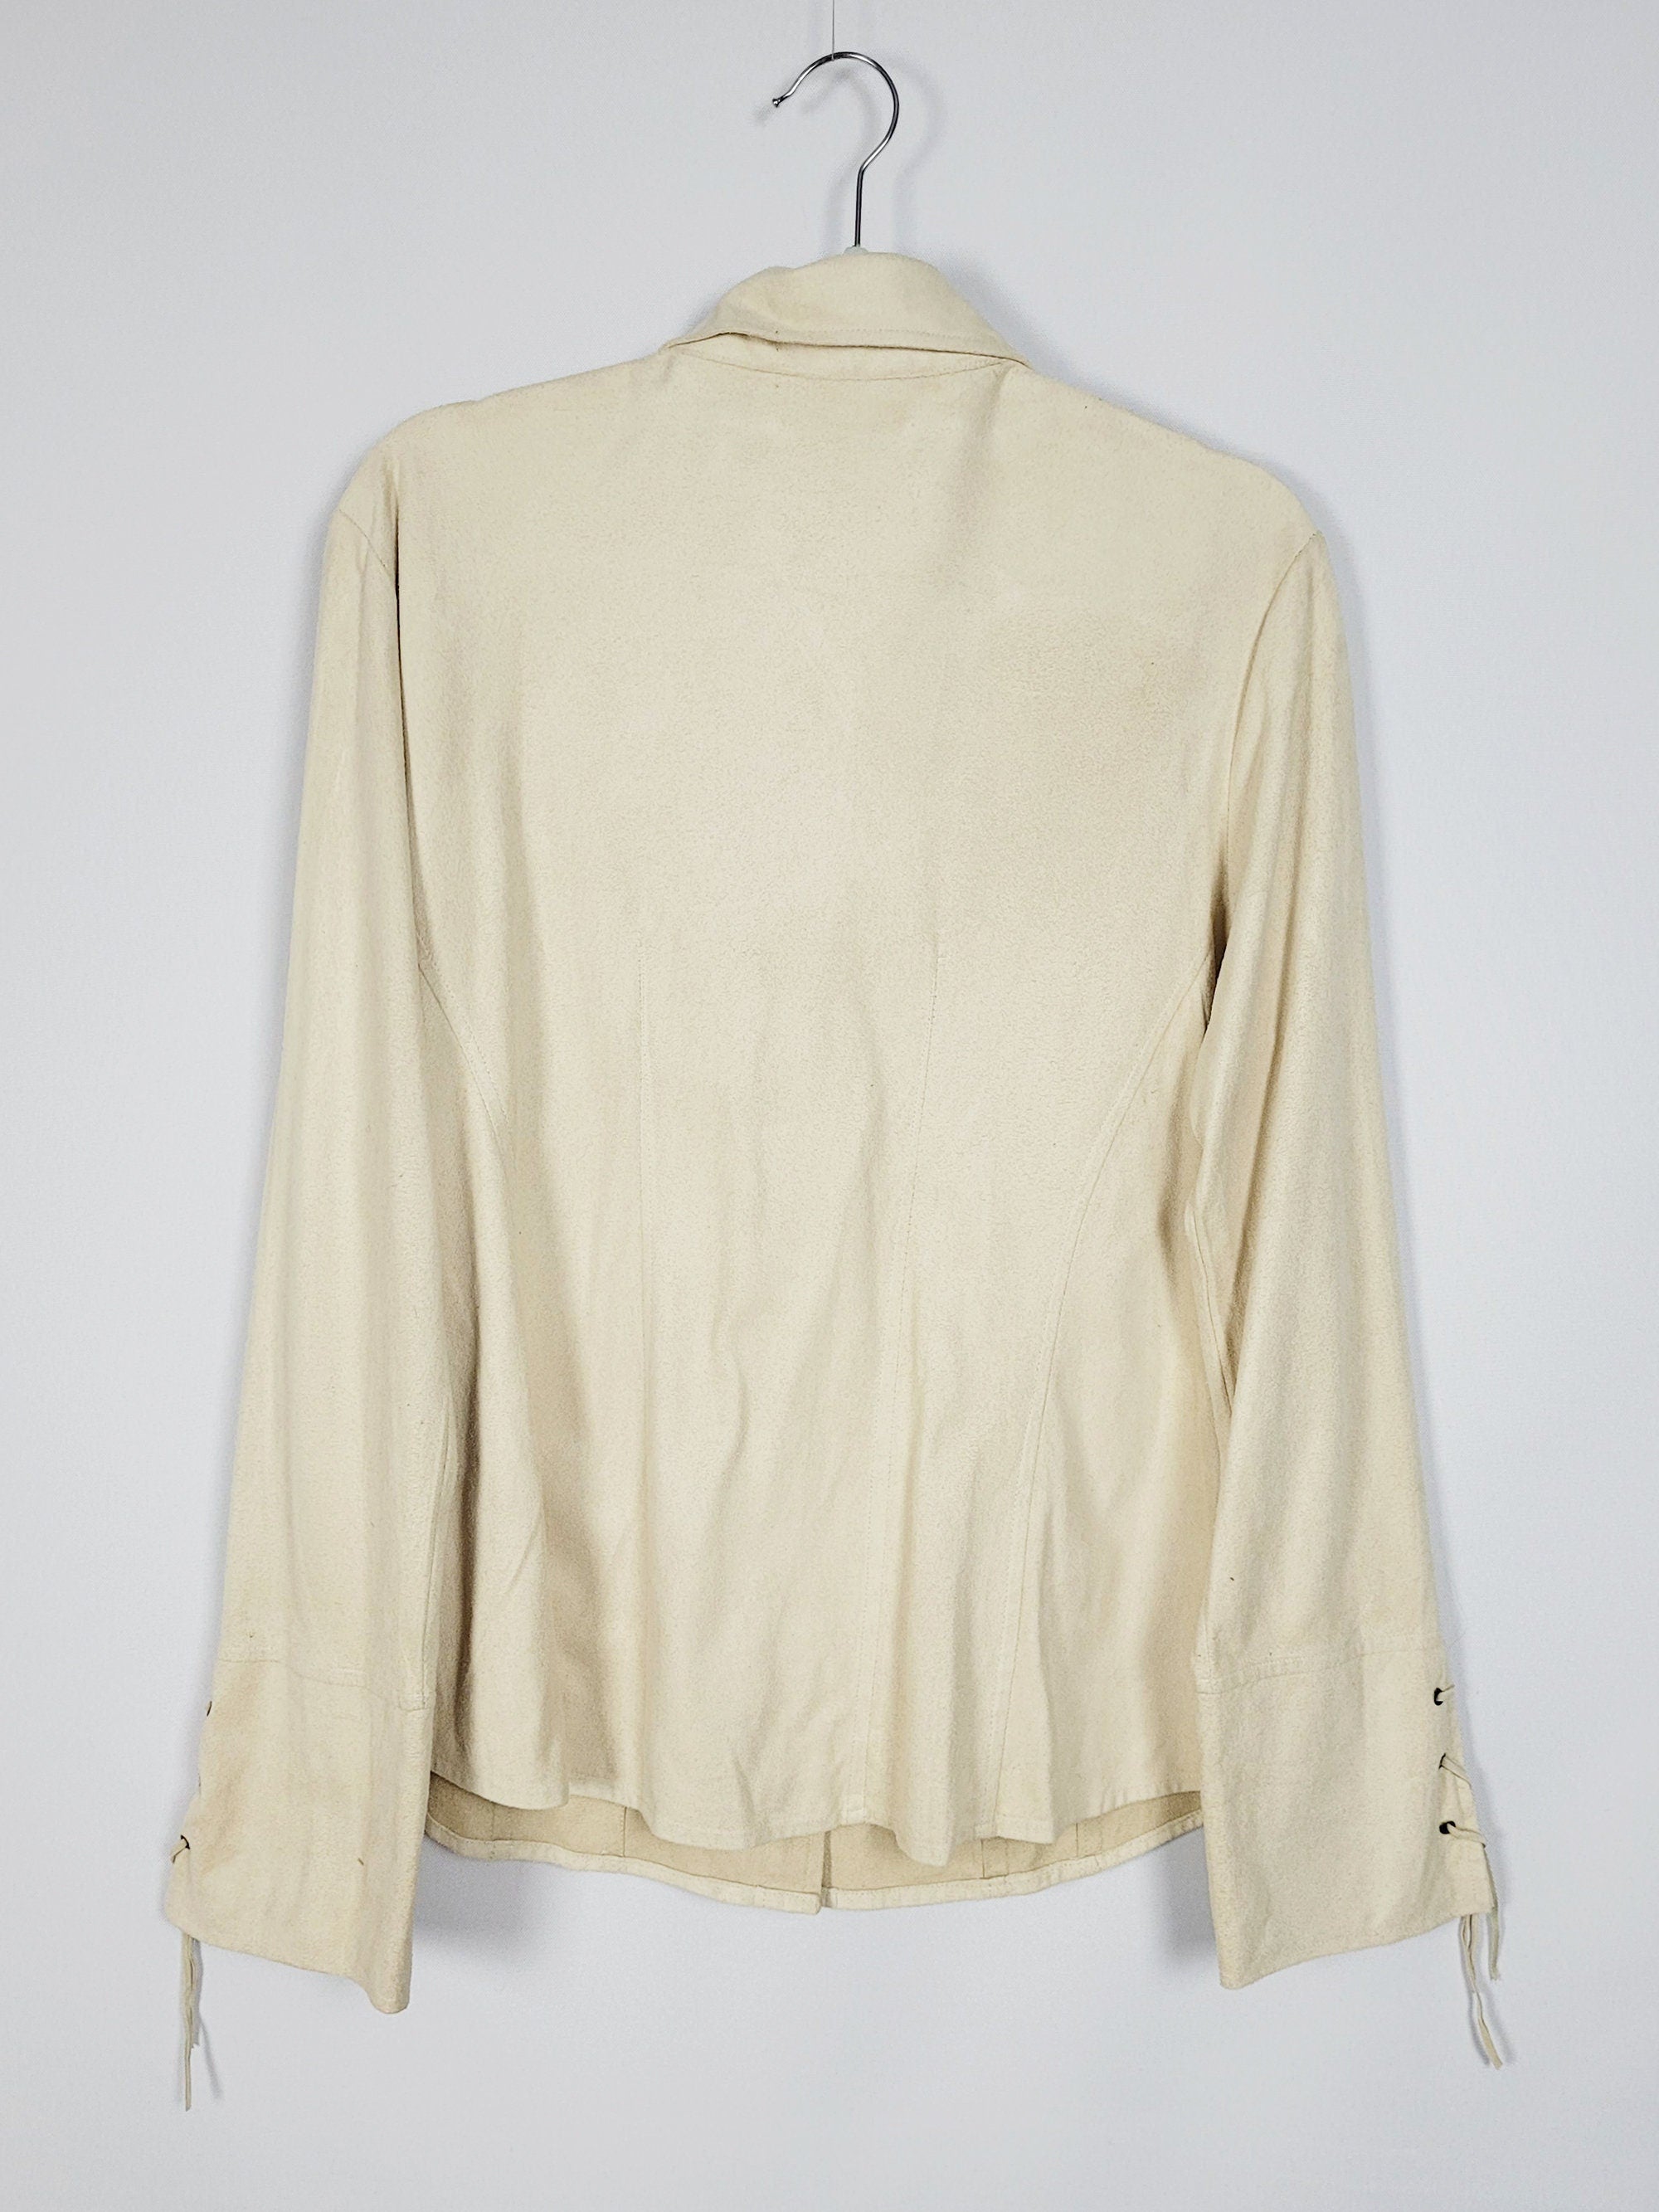 90s retro faux suede beige minimalist Western shirt blouse